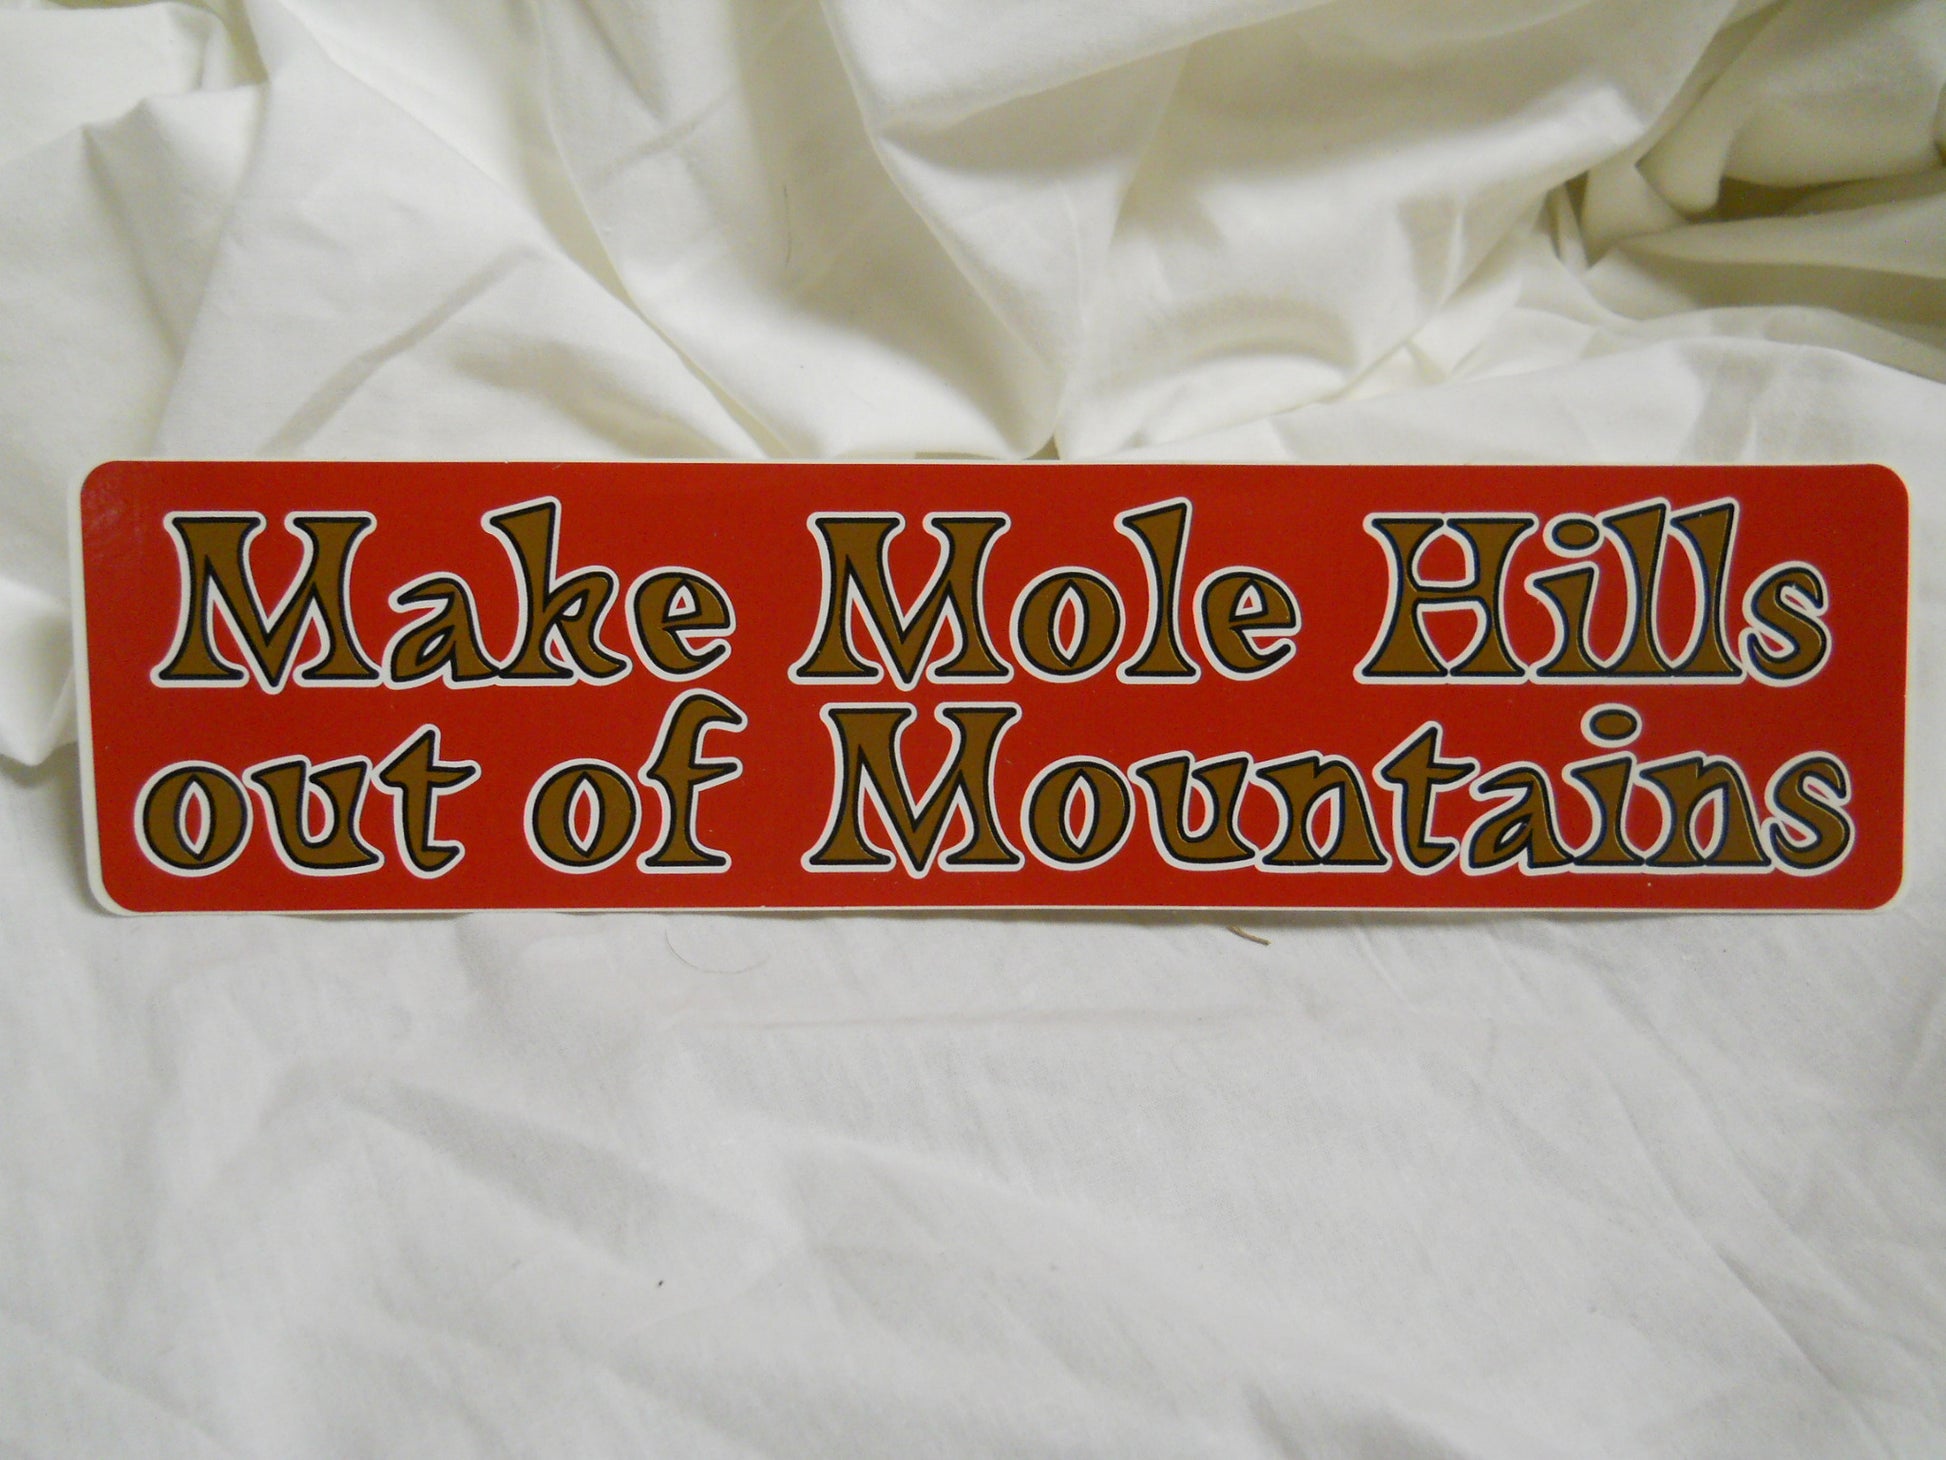 Make Mole Hills out of Mountains Sticker - HalfMoonMusic